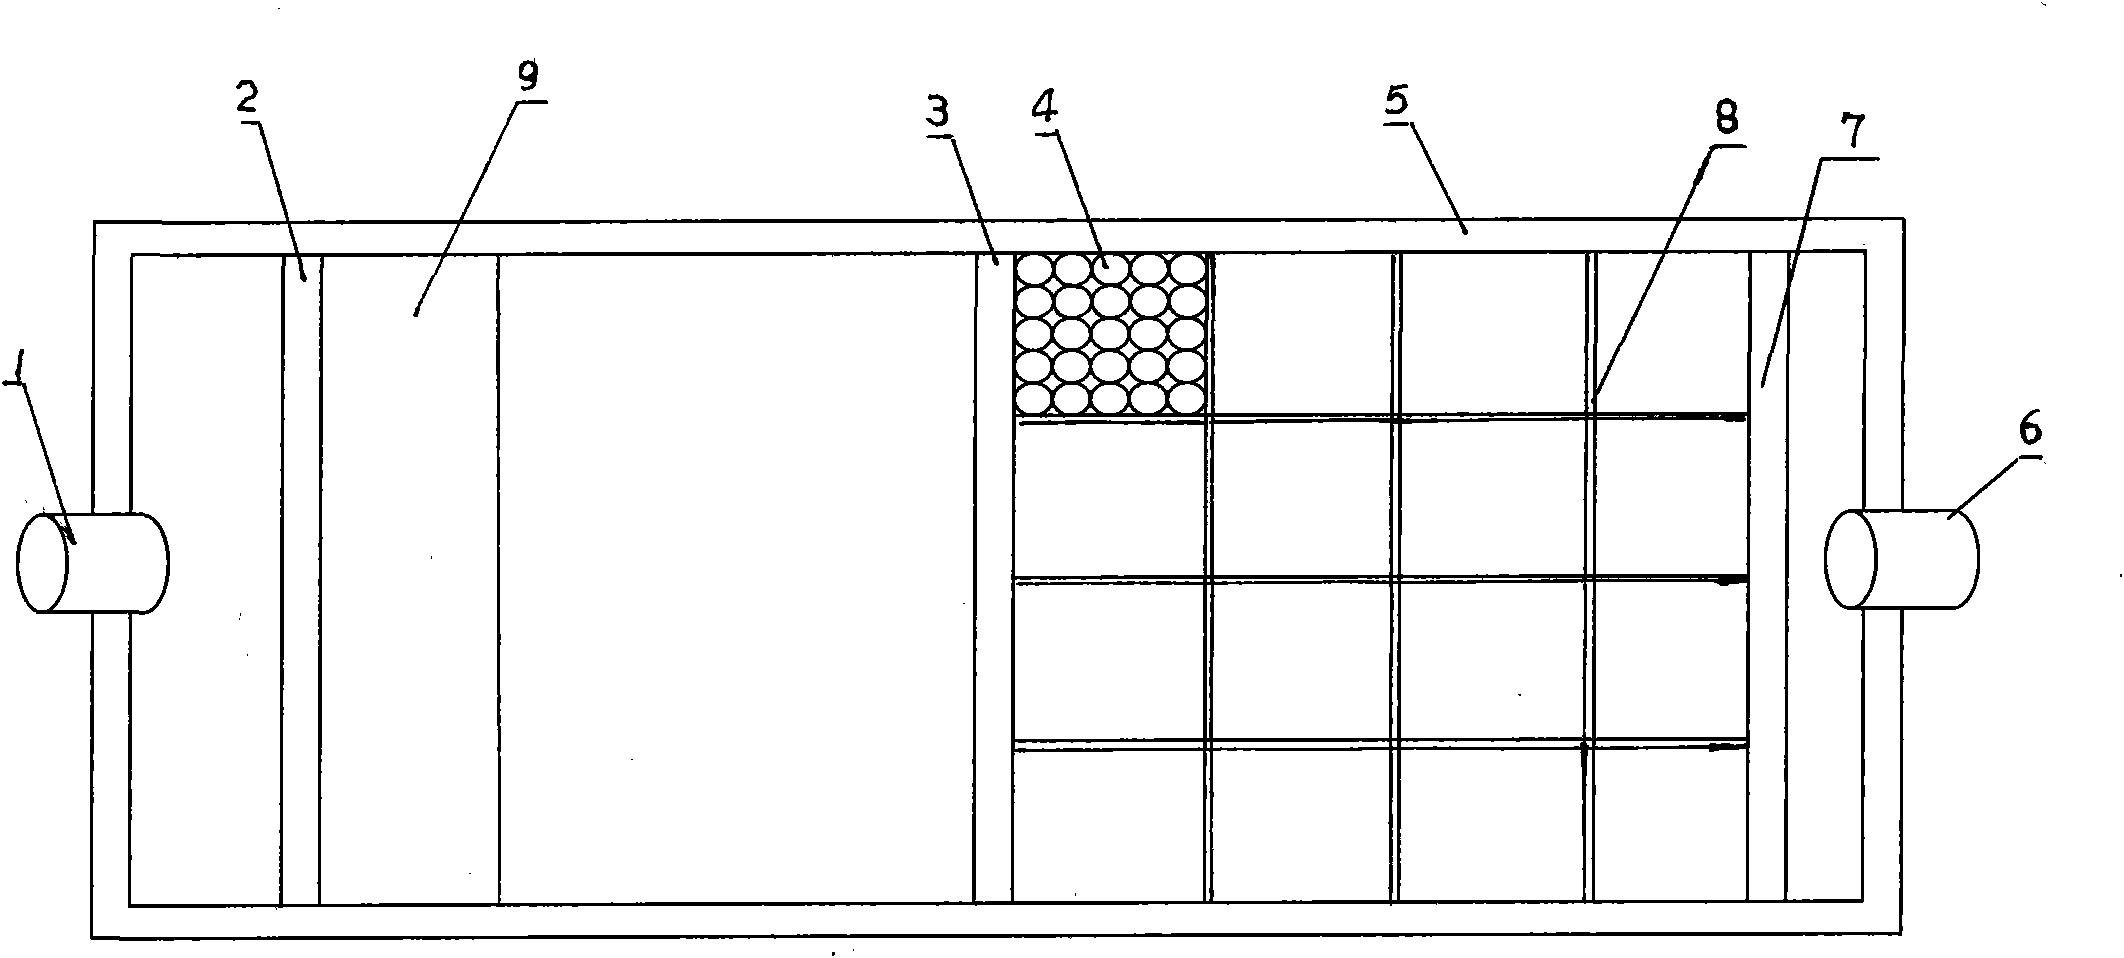 Precipitation method of horizontal flow tank